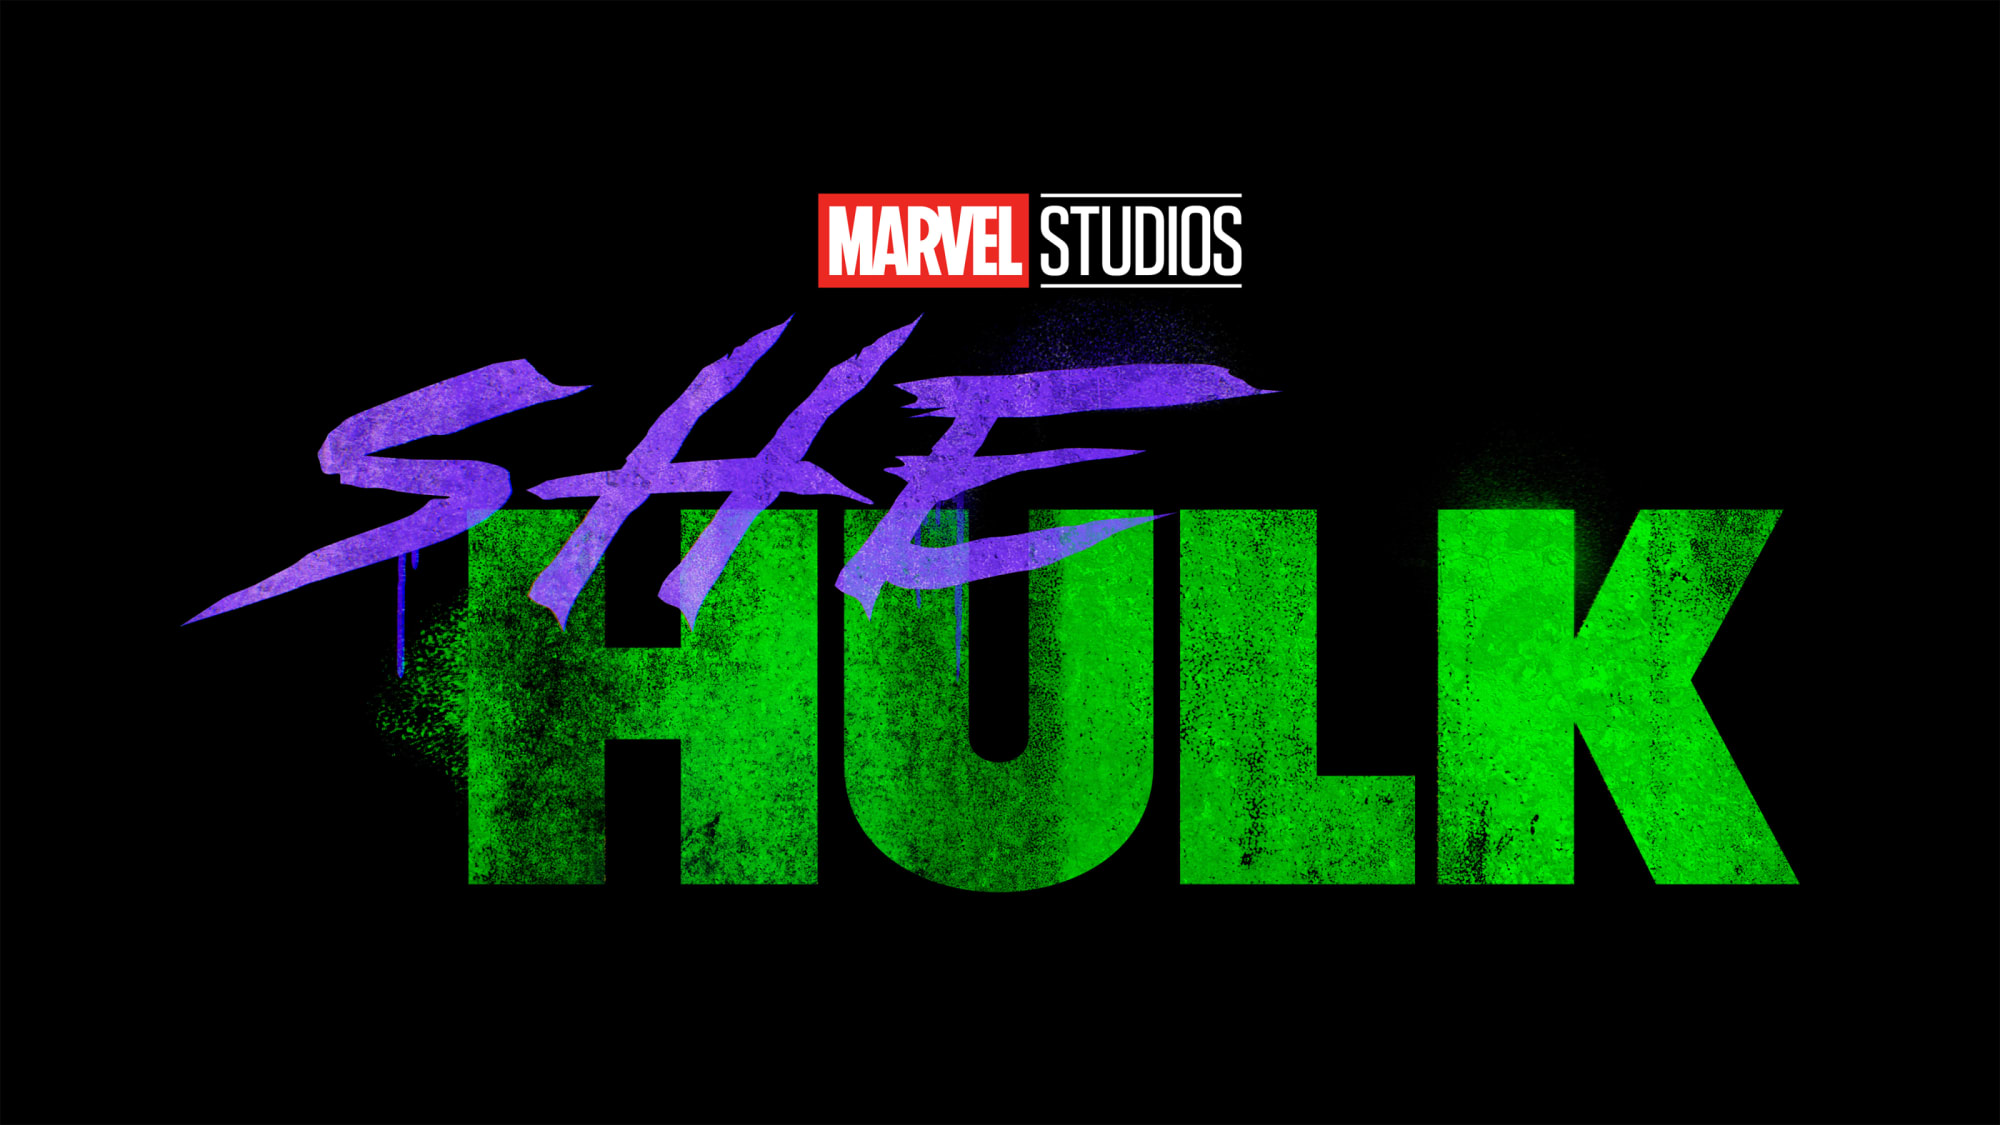 She-Hulk may be battling these Marvel villains in Disney Plus series